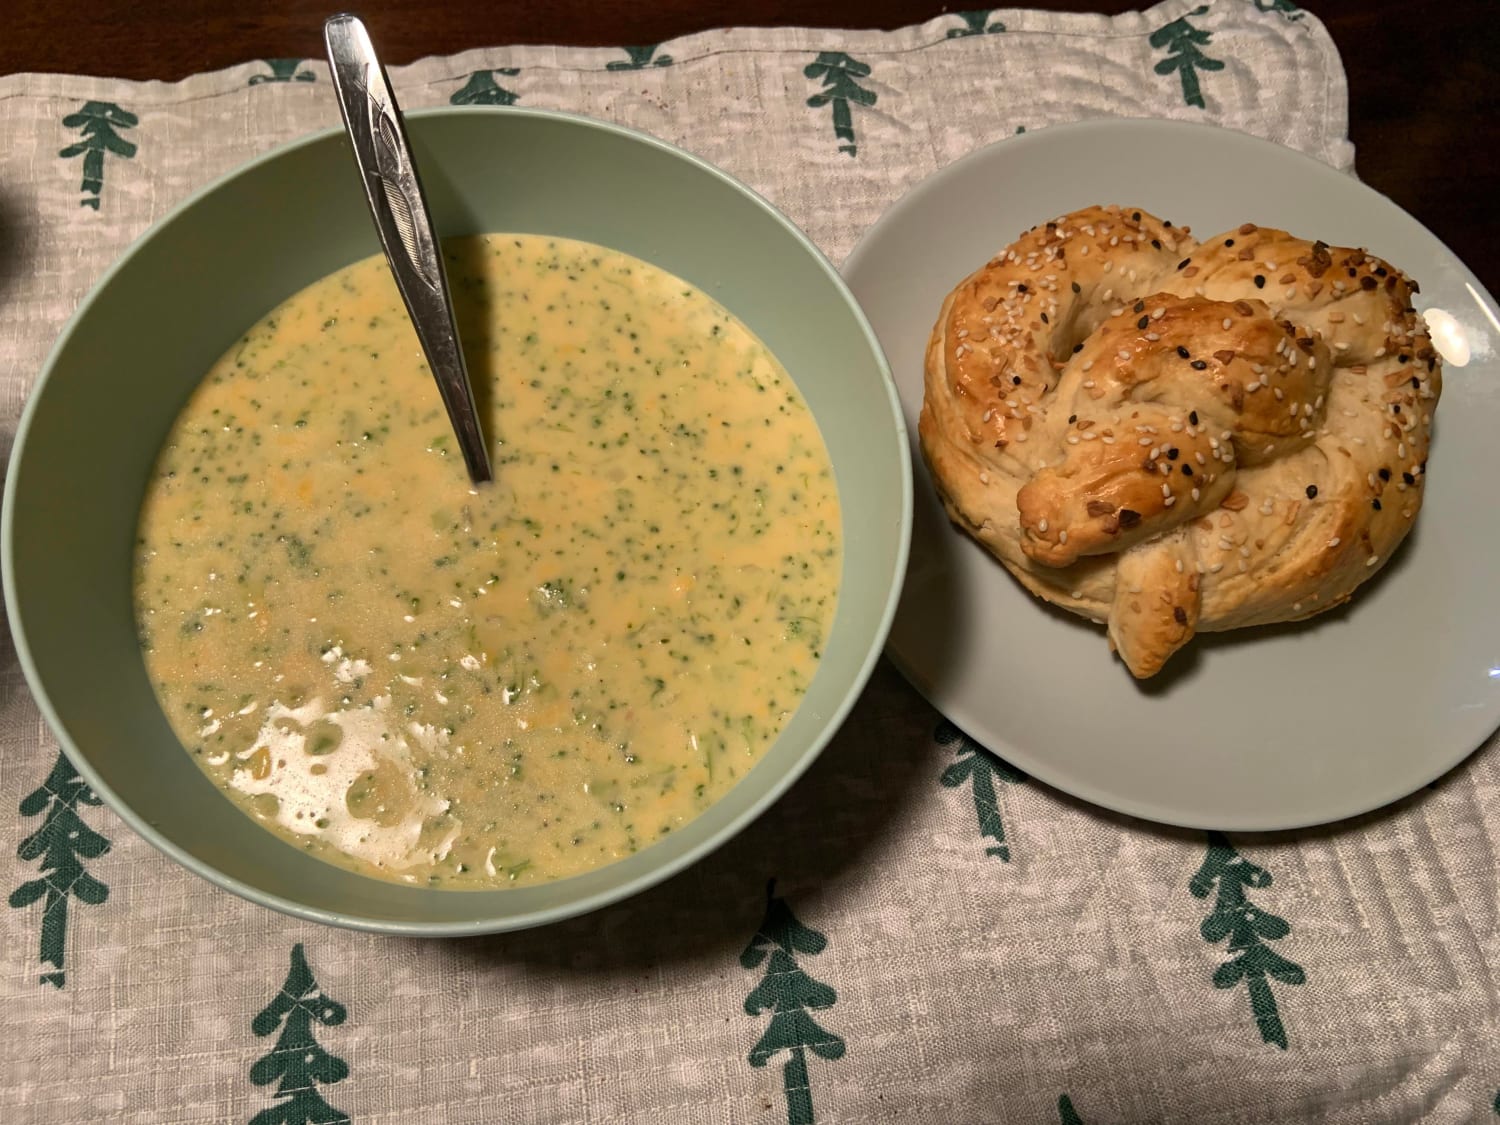 [homemade] Broccoli Cheddar Soup and Everything Seasoned Soft Pretzel